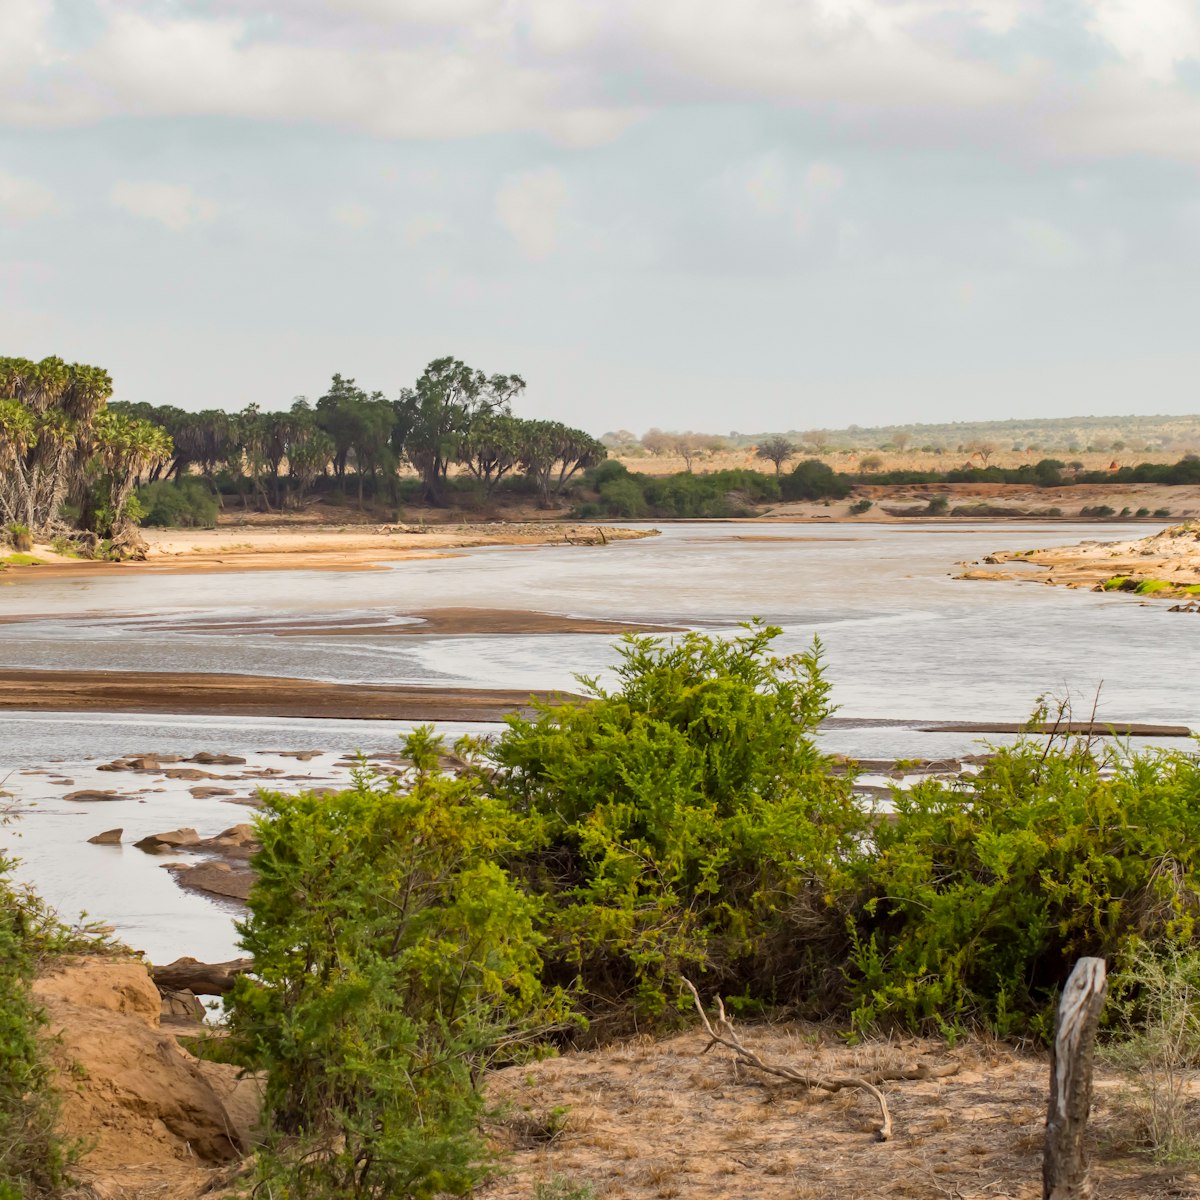 Galana River, Tsavo East National Park, Kenya.